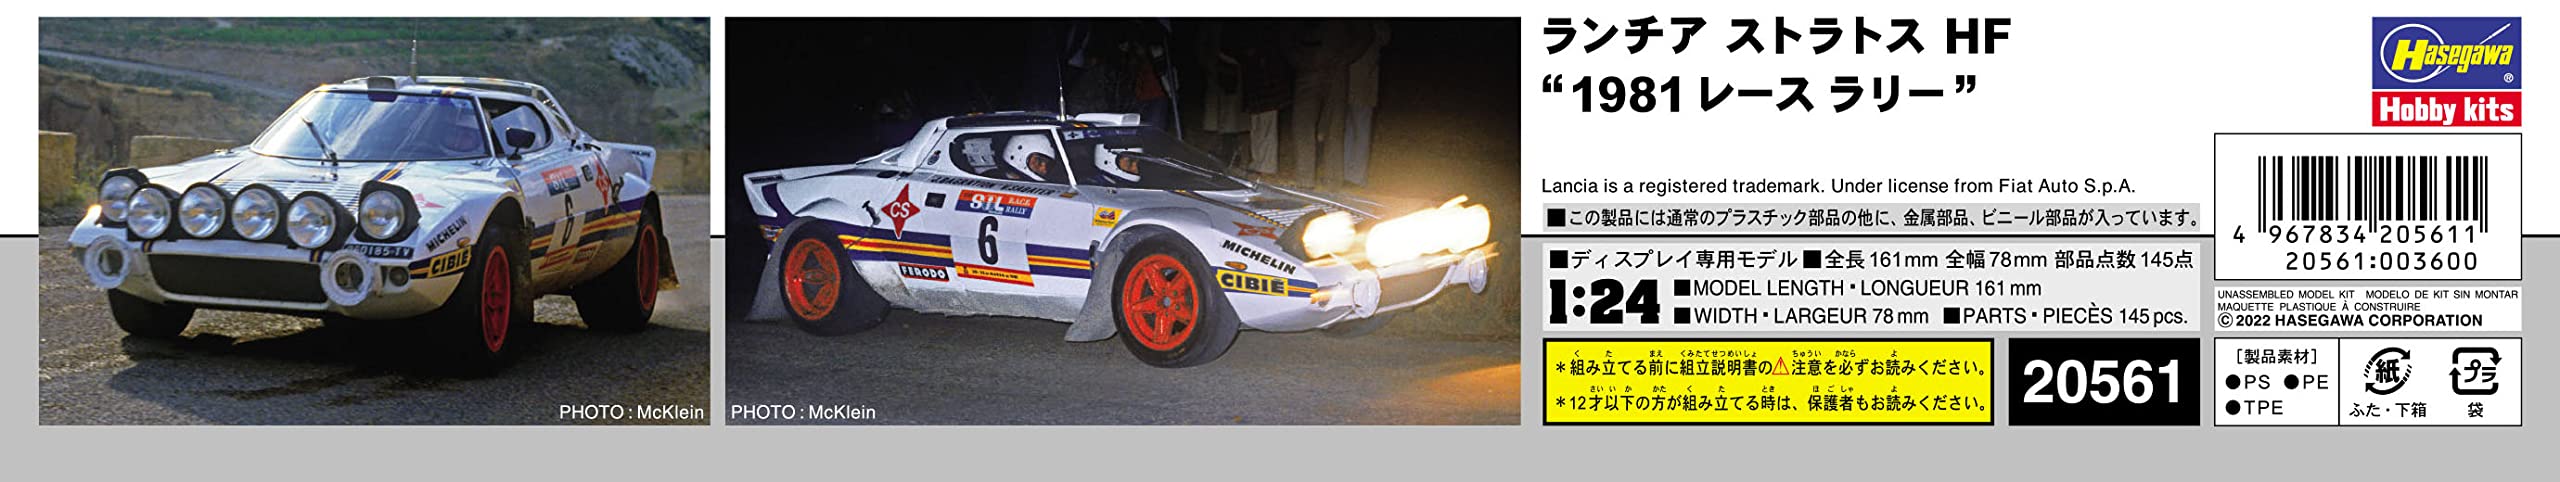 HASEGAWA 1/24 Lancia Stratos Hf '1981 Race Rally' Plastikmodell